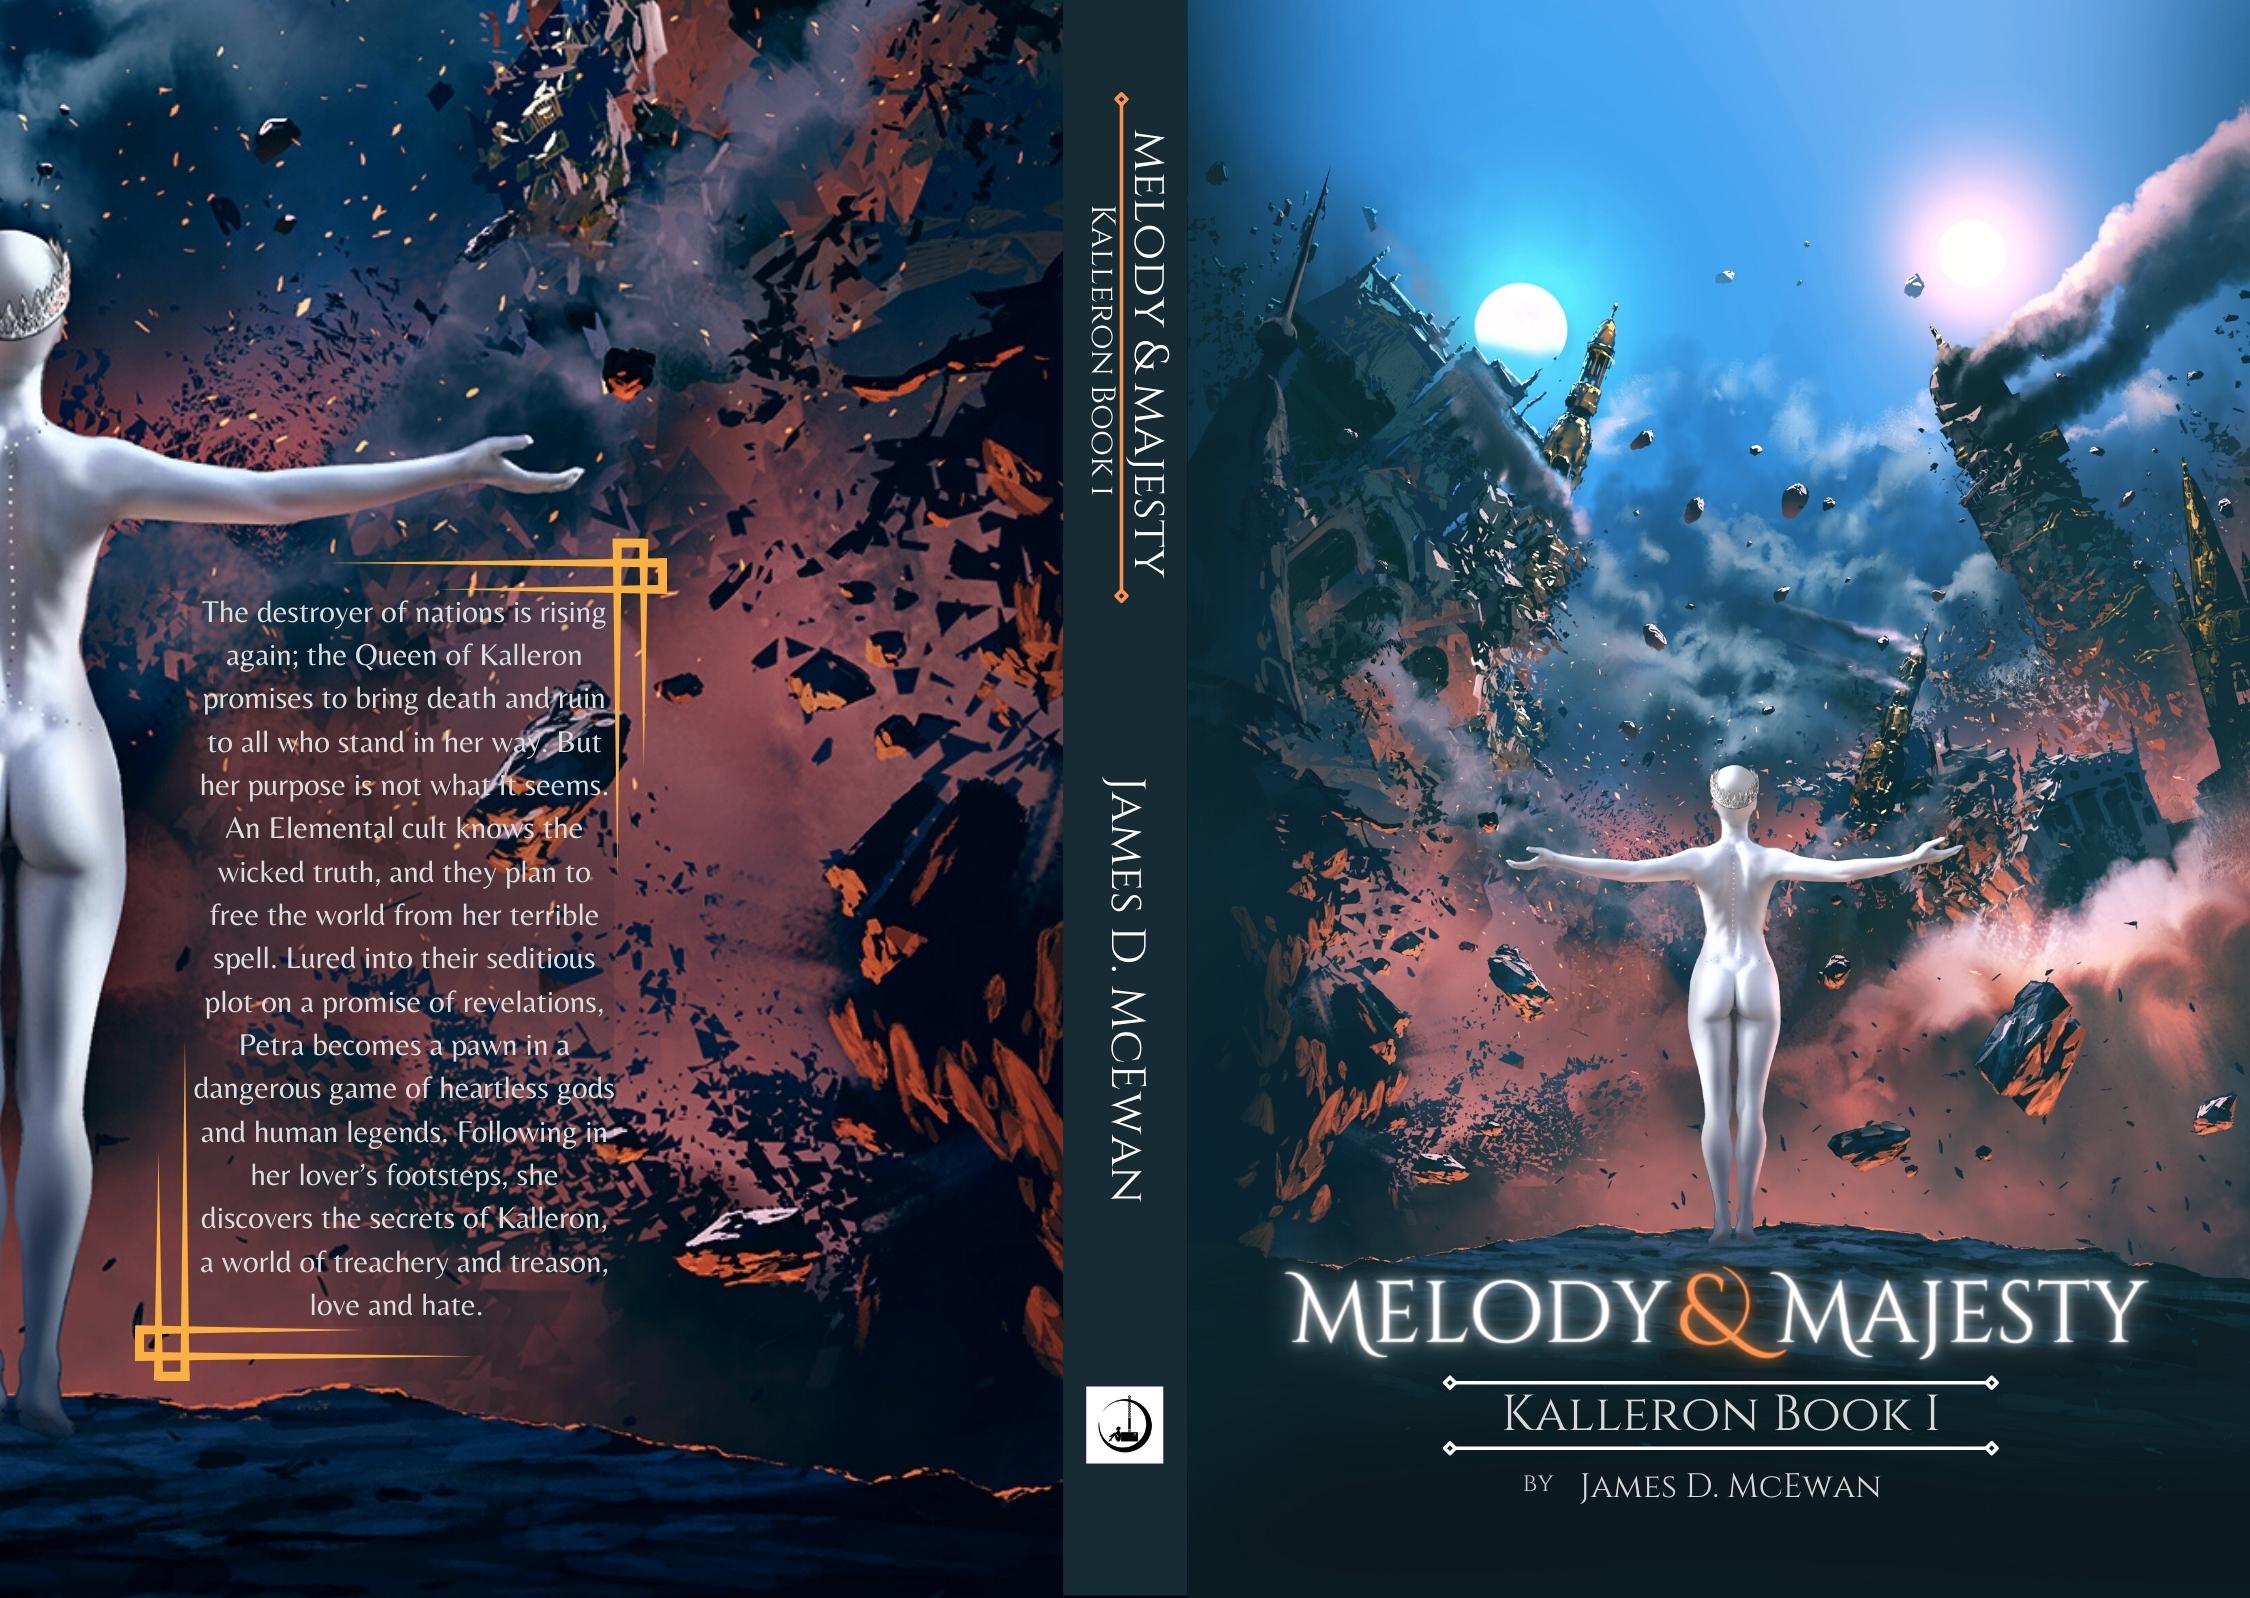 Melody & Majesty paperback book cover